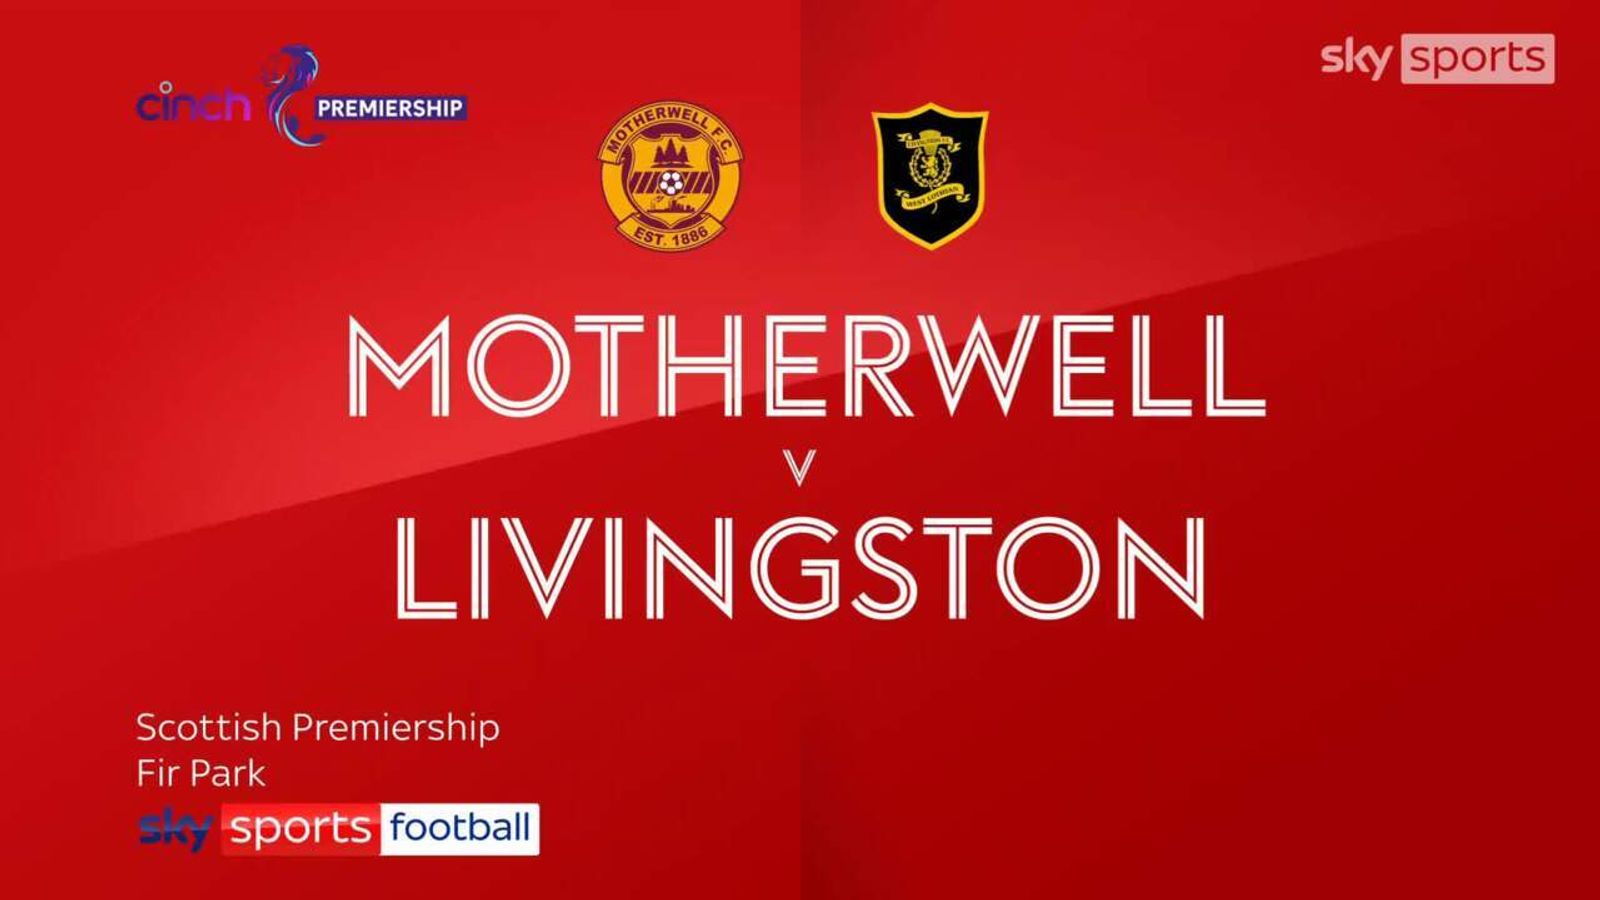 Motherwell 4-1 Livingston